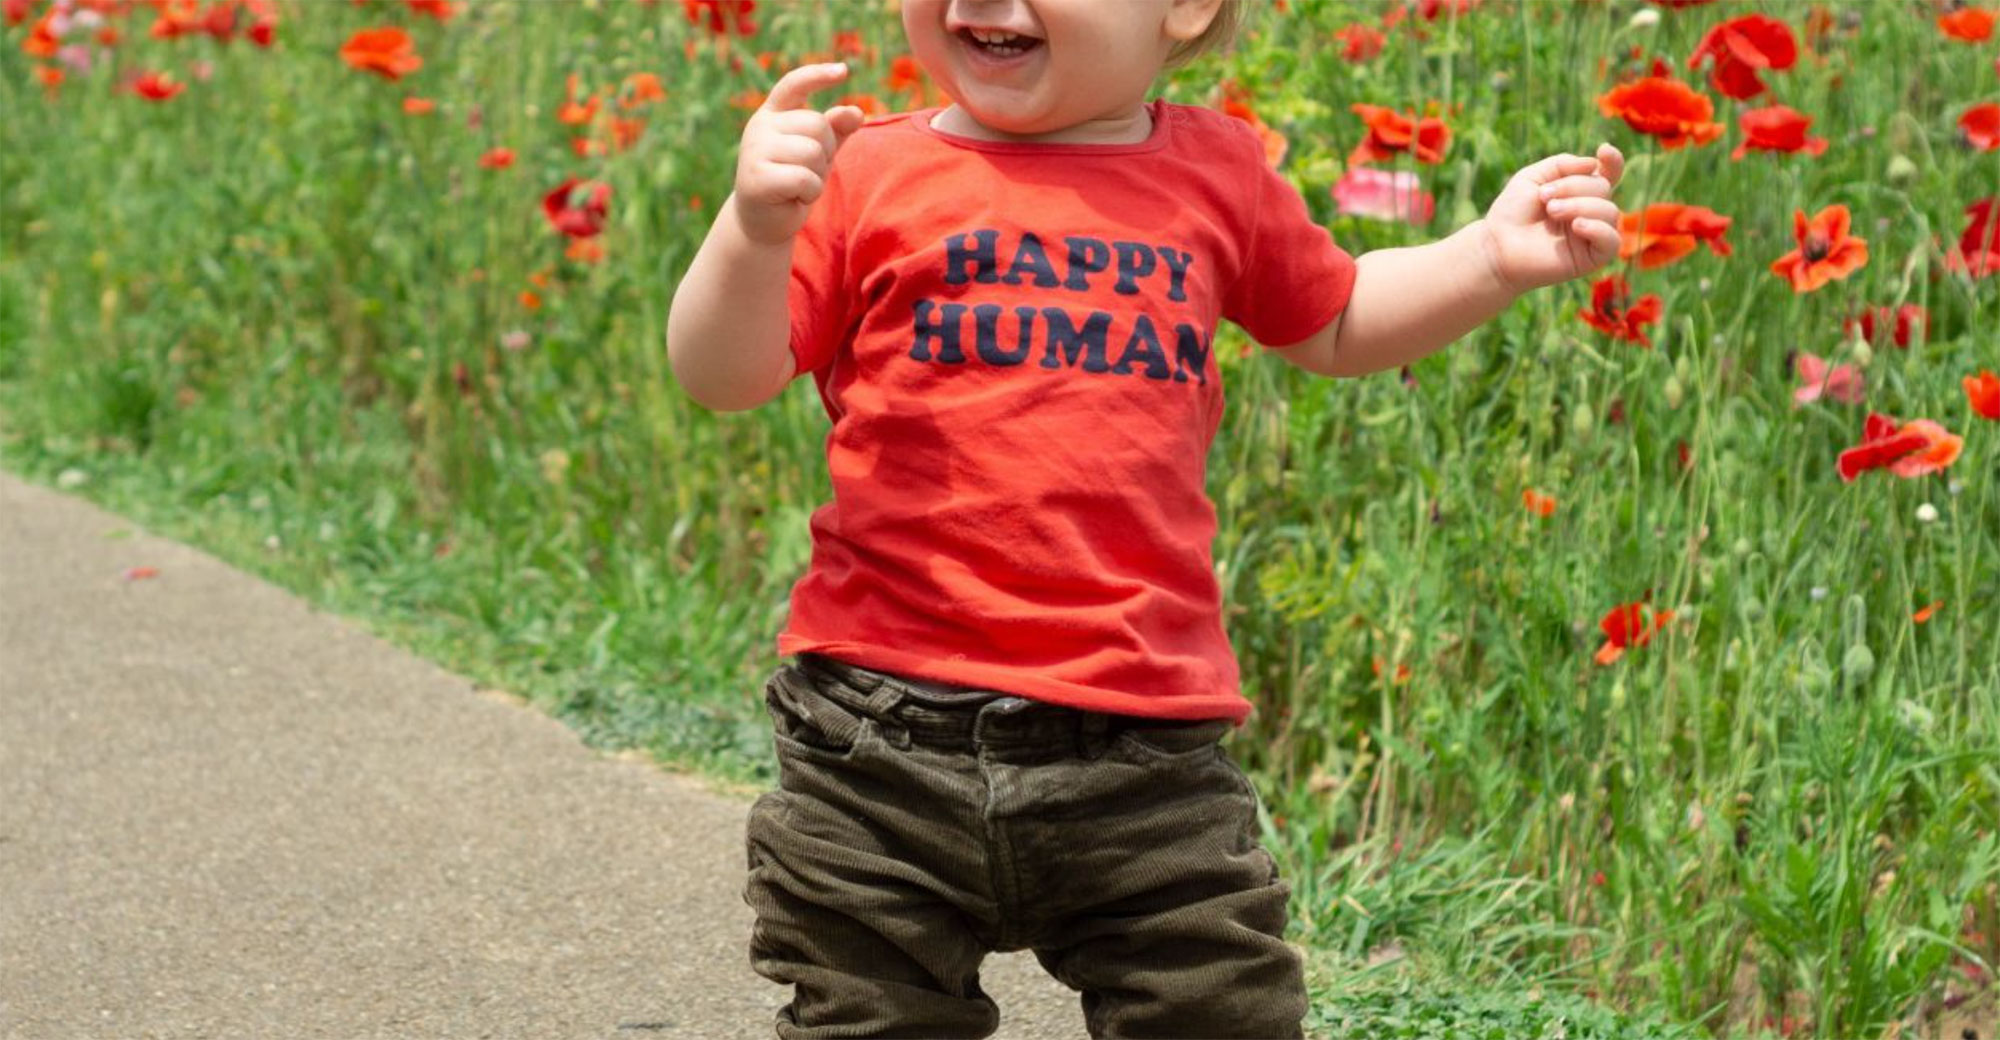 Toddler wearing tee-shirt that says "Happy Human"